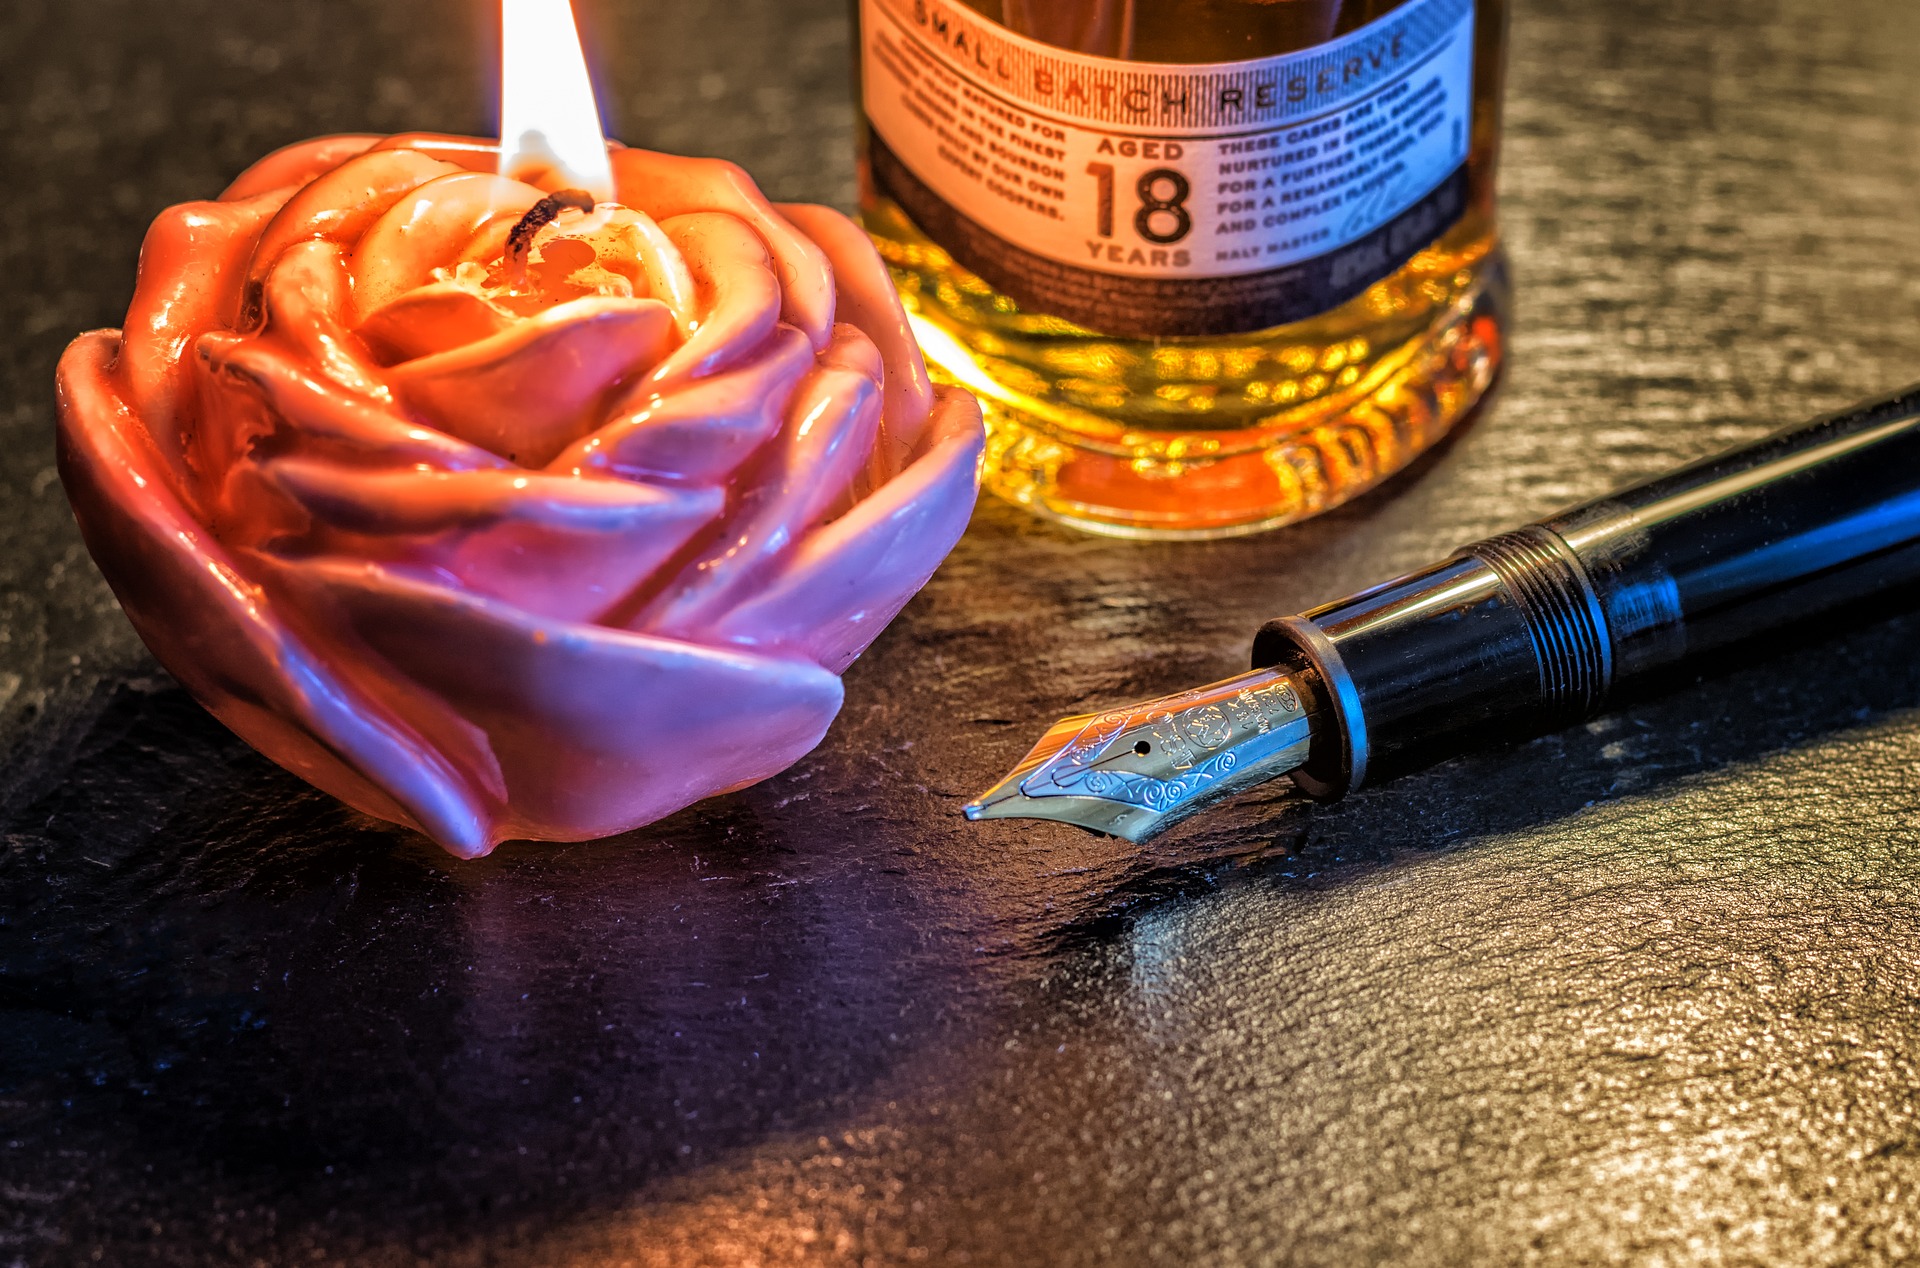 Whisky and luxury. Source: Pixabay